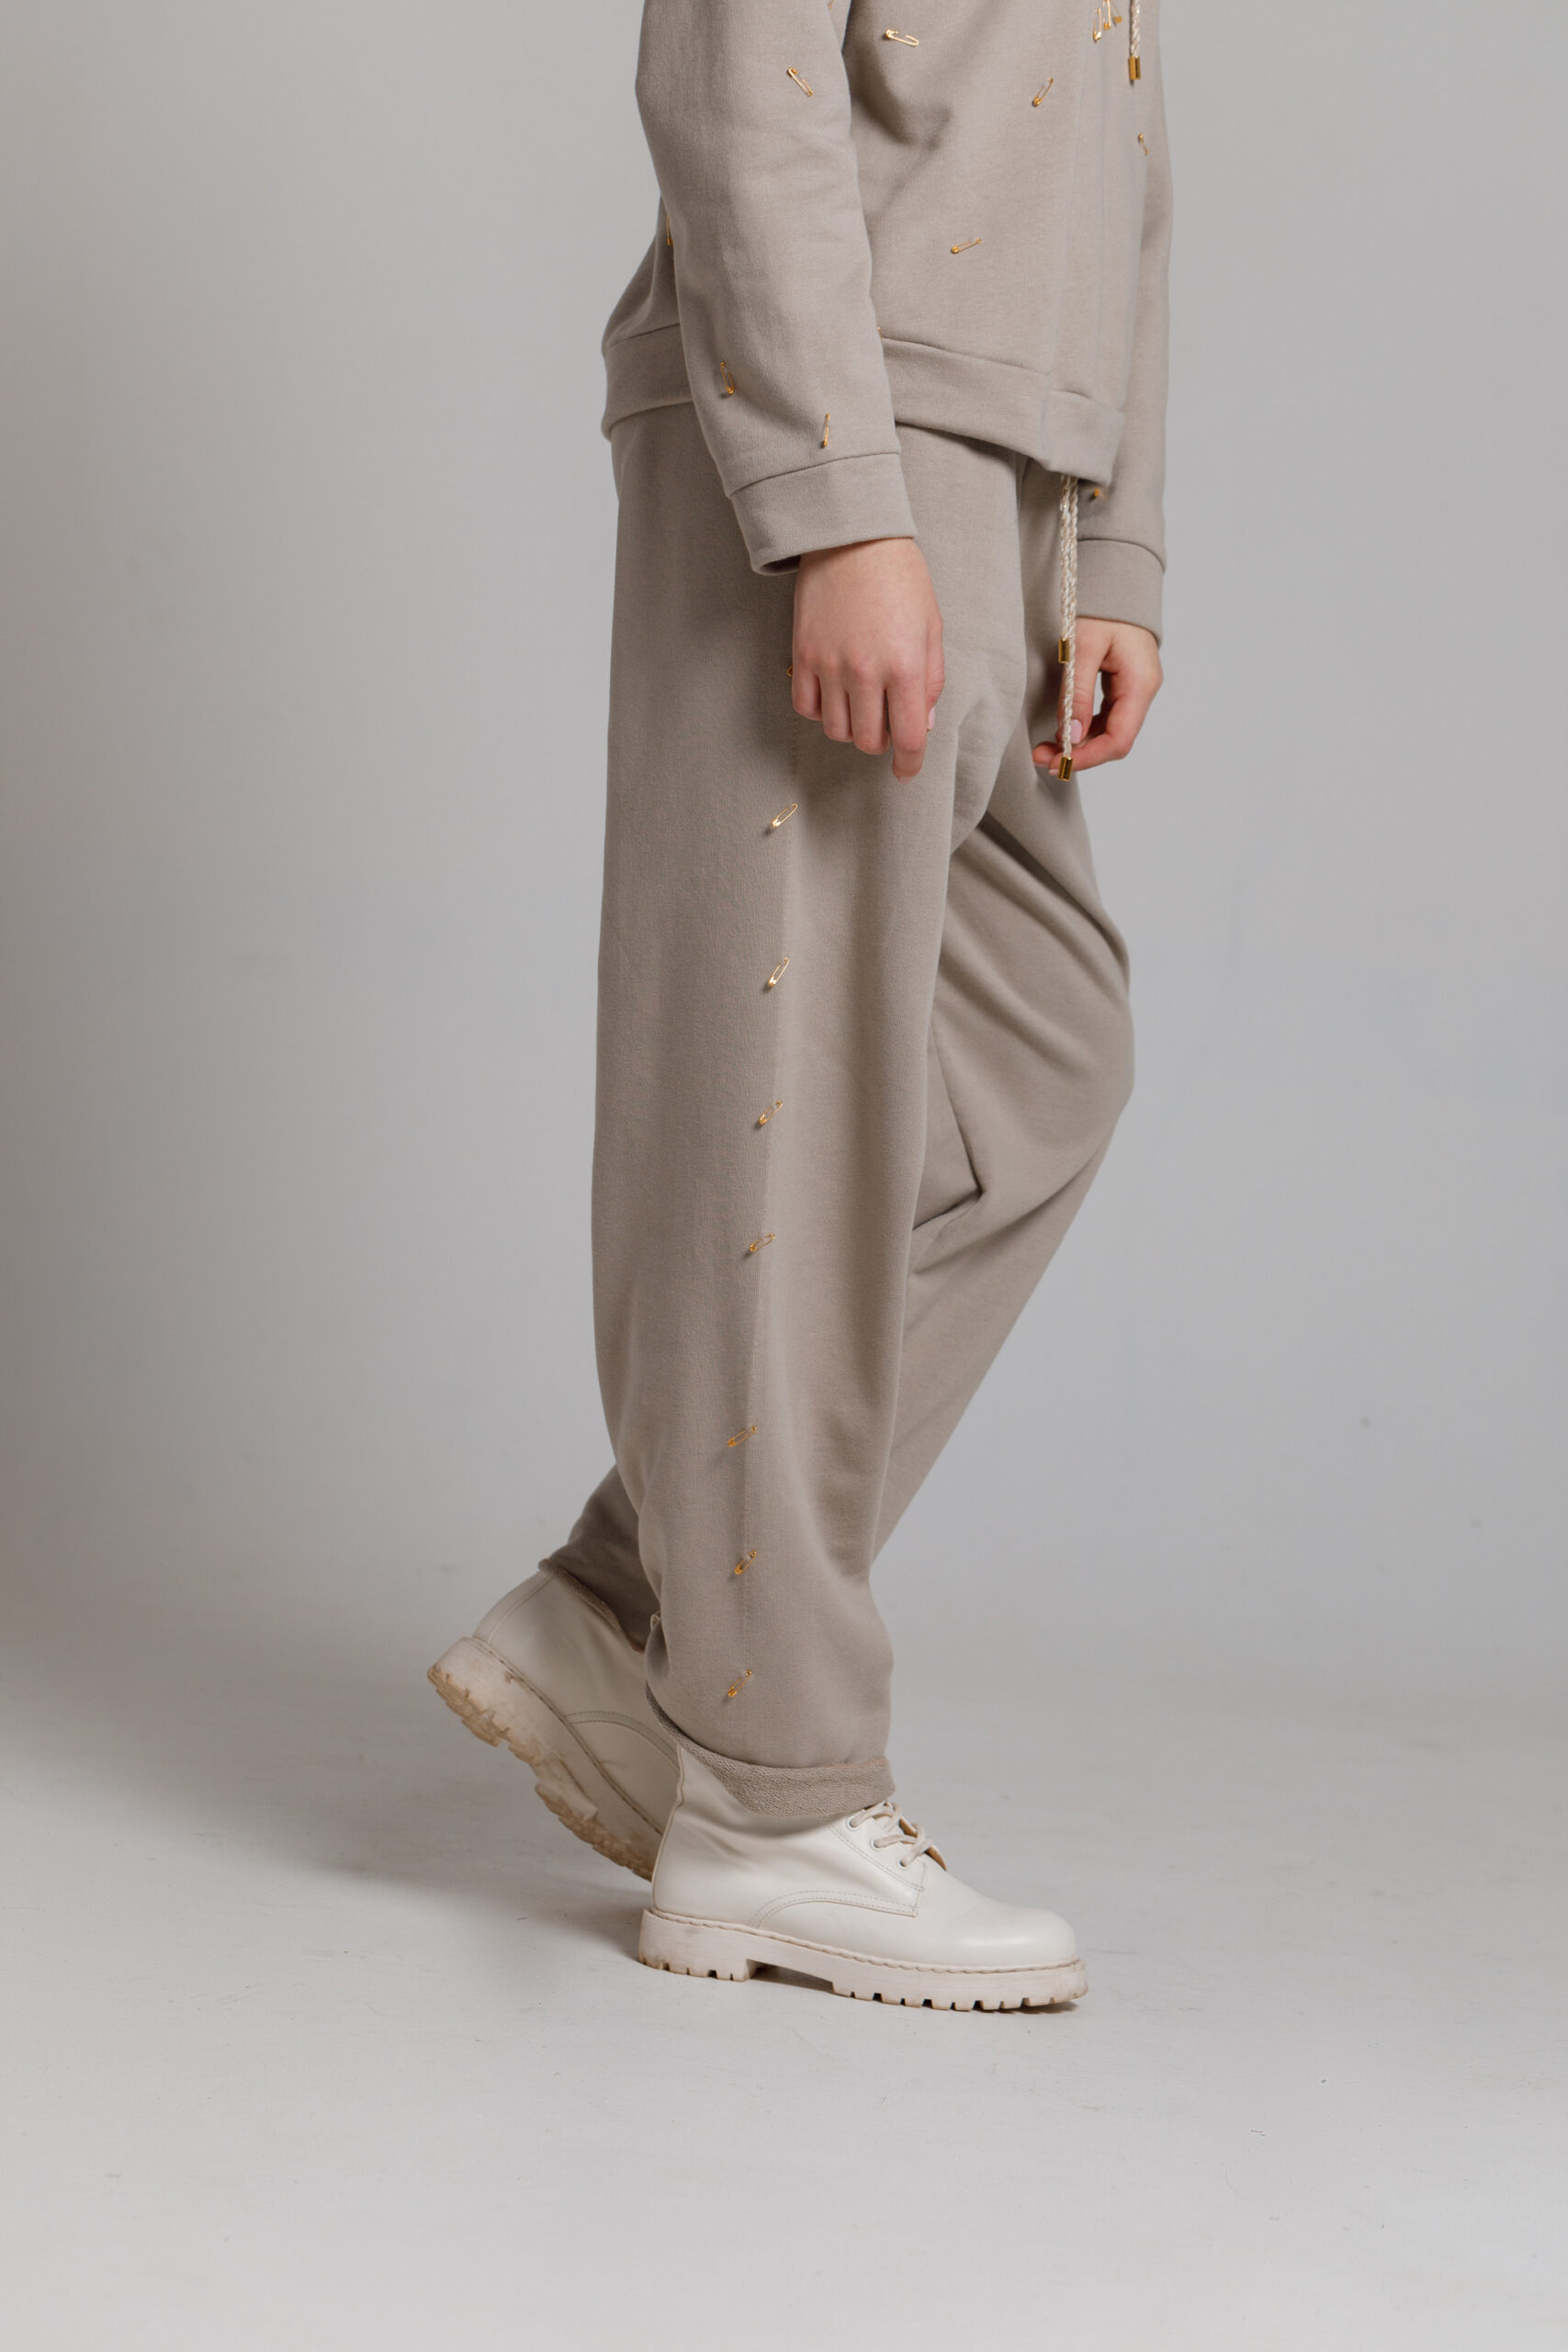 Pantalon casual MARS bej. Materiale naturale, design unicat, cu broderie si aplicatii handmade